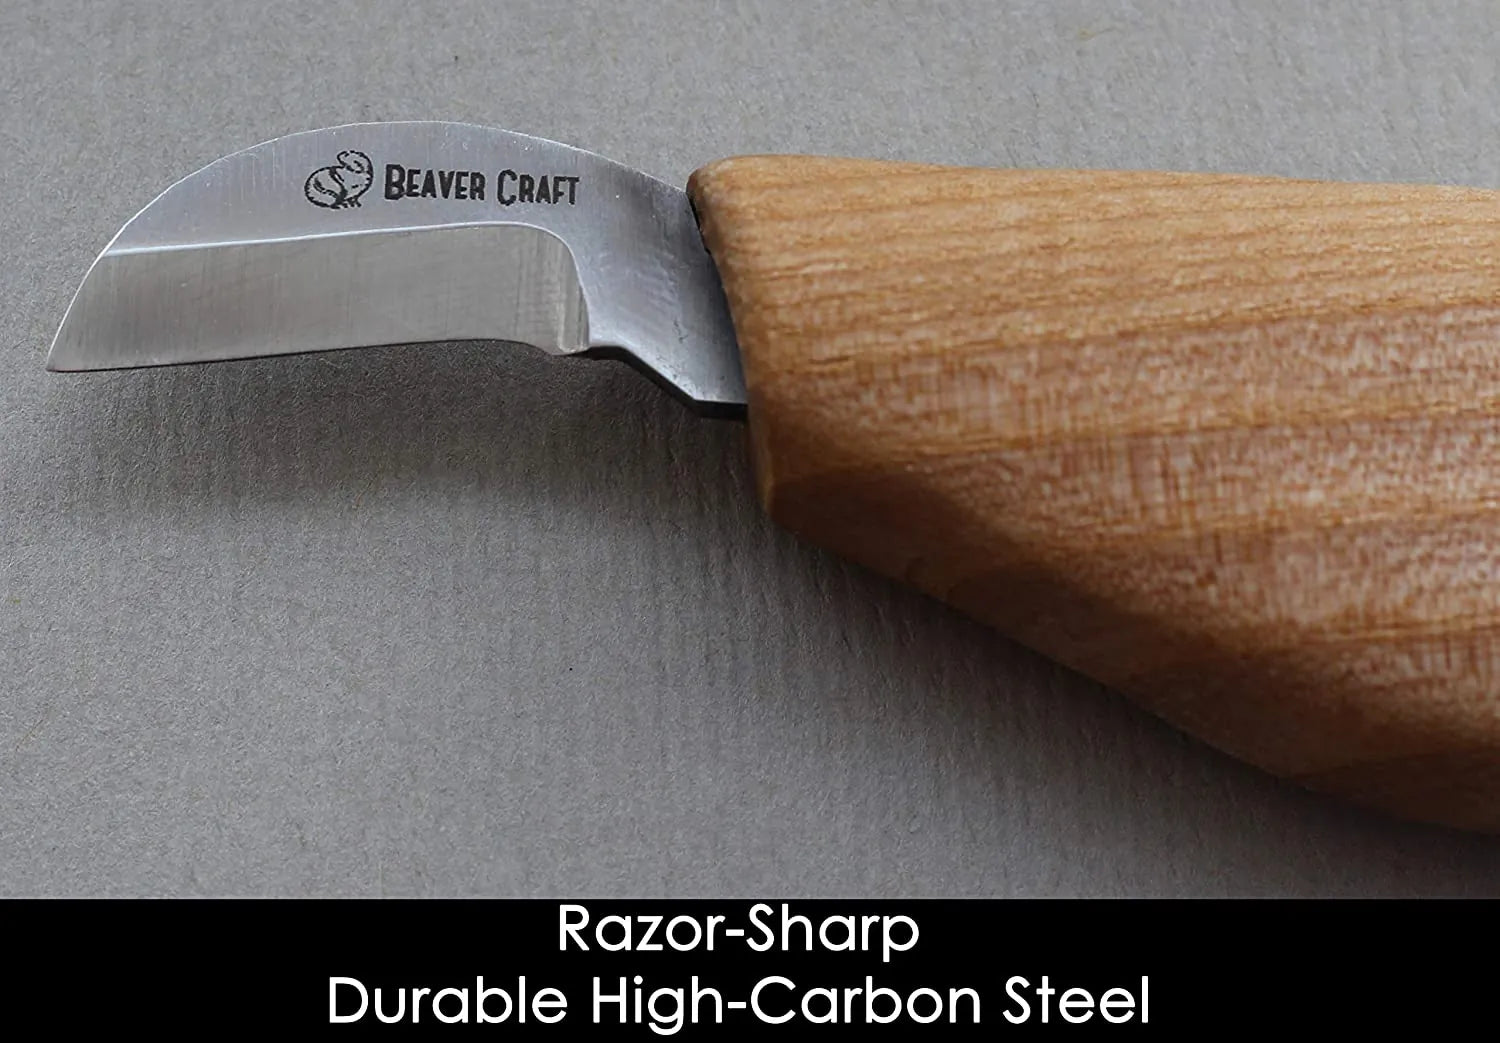 BeaverCraft Chip Carving Knife C6 1 Wood Carving Knife for Fine Chip  Carving